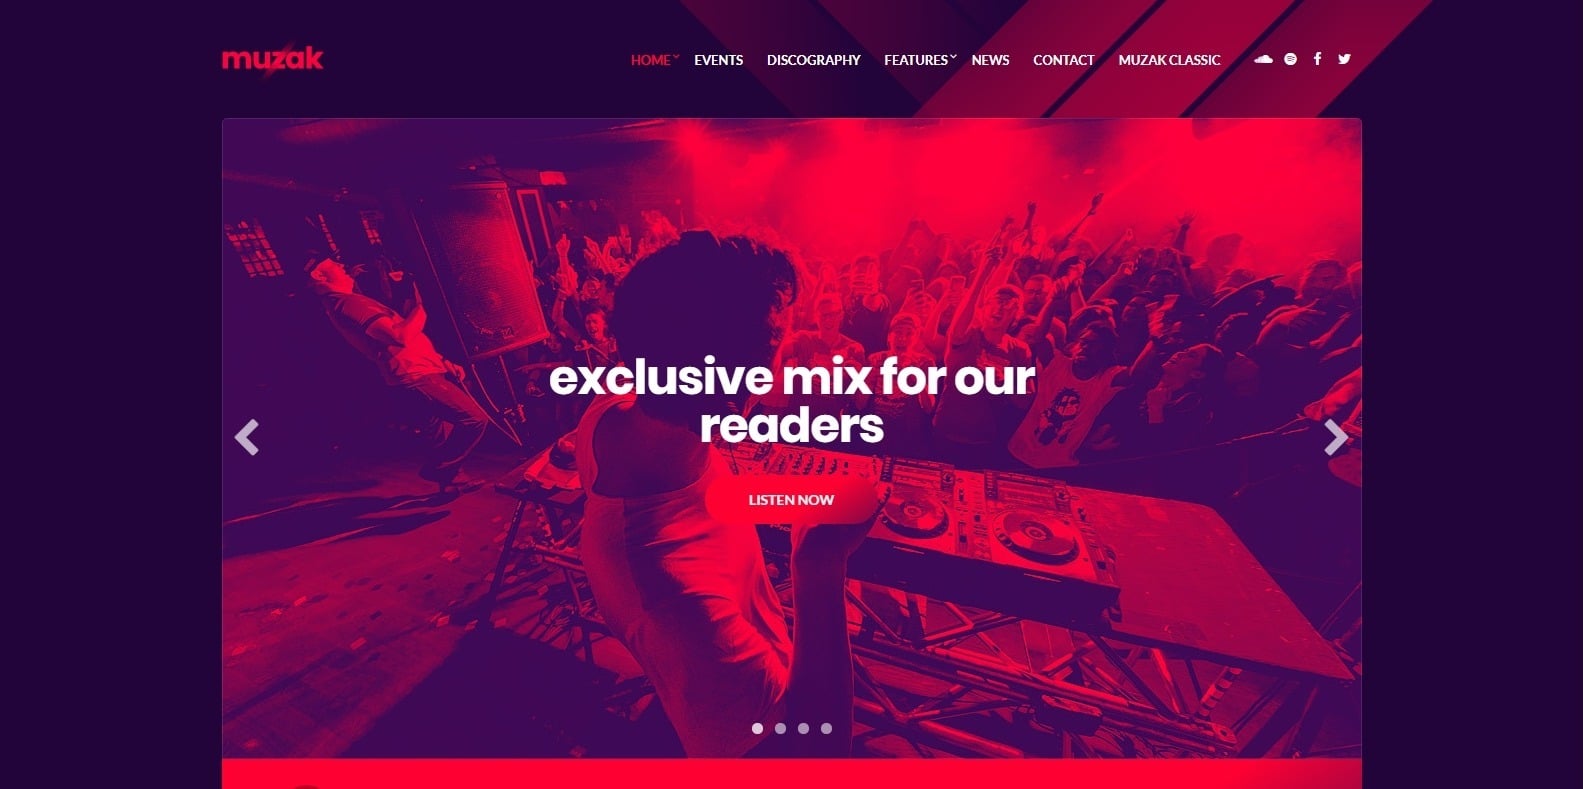 muzak-html-music-website-template